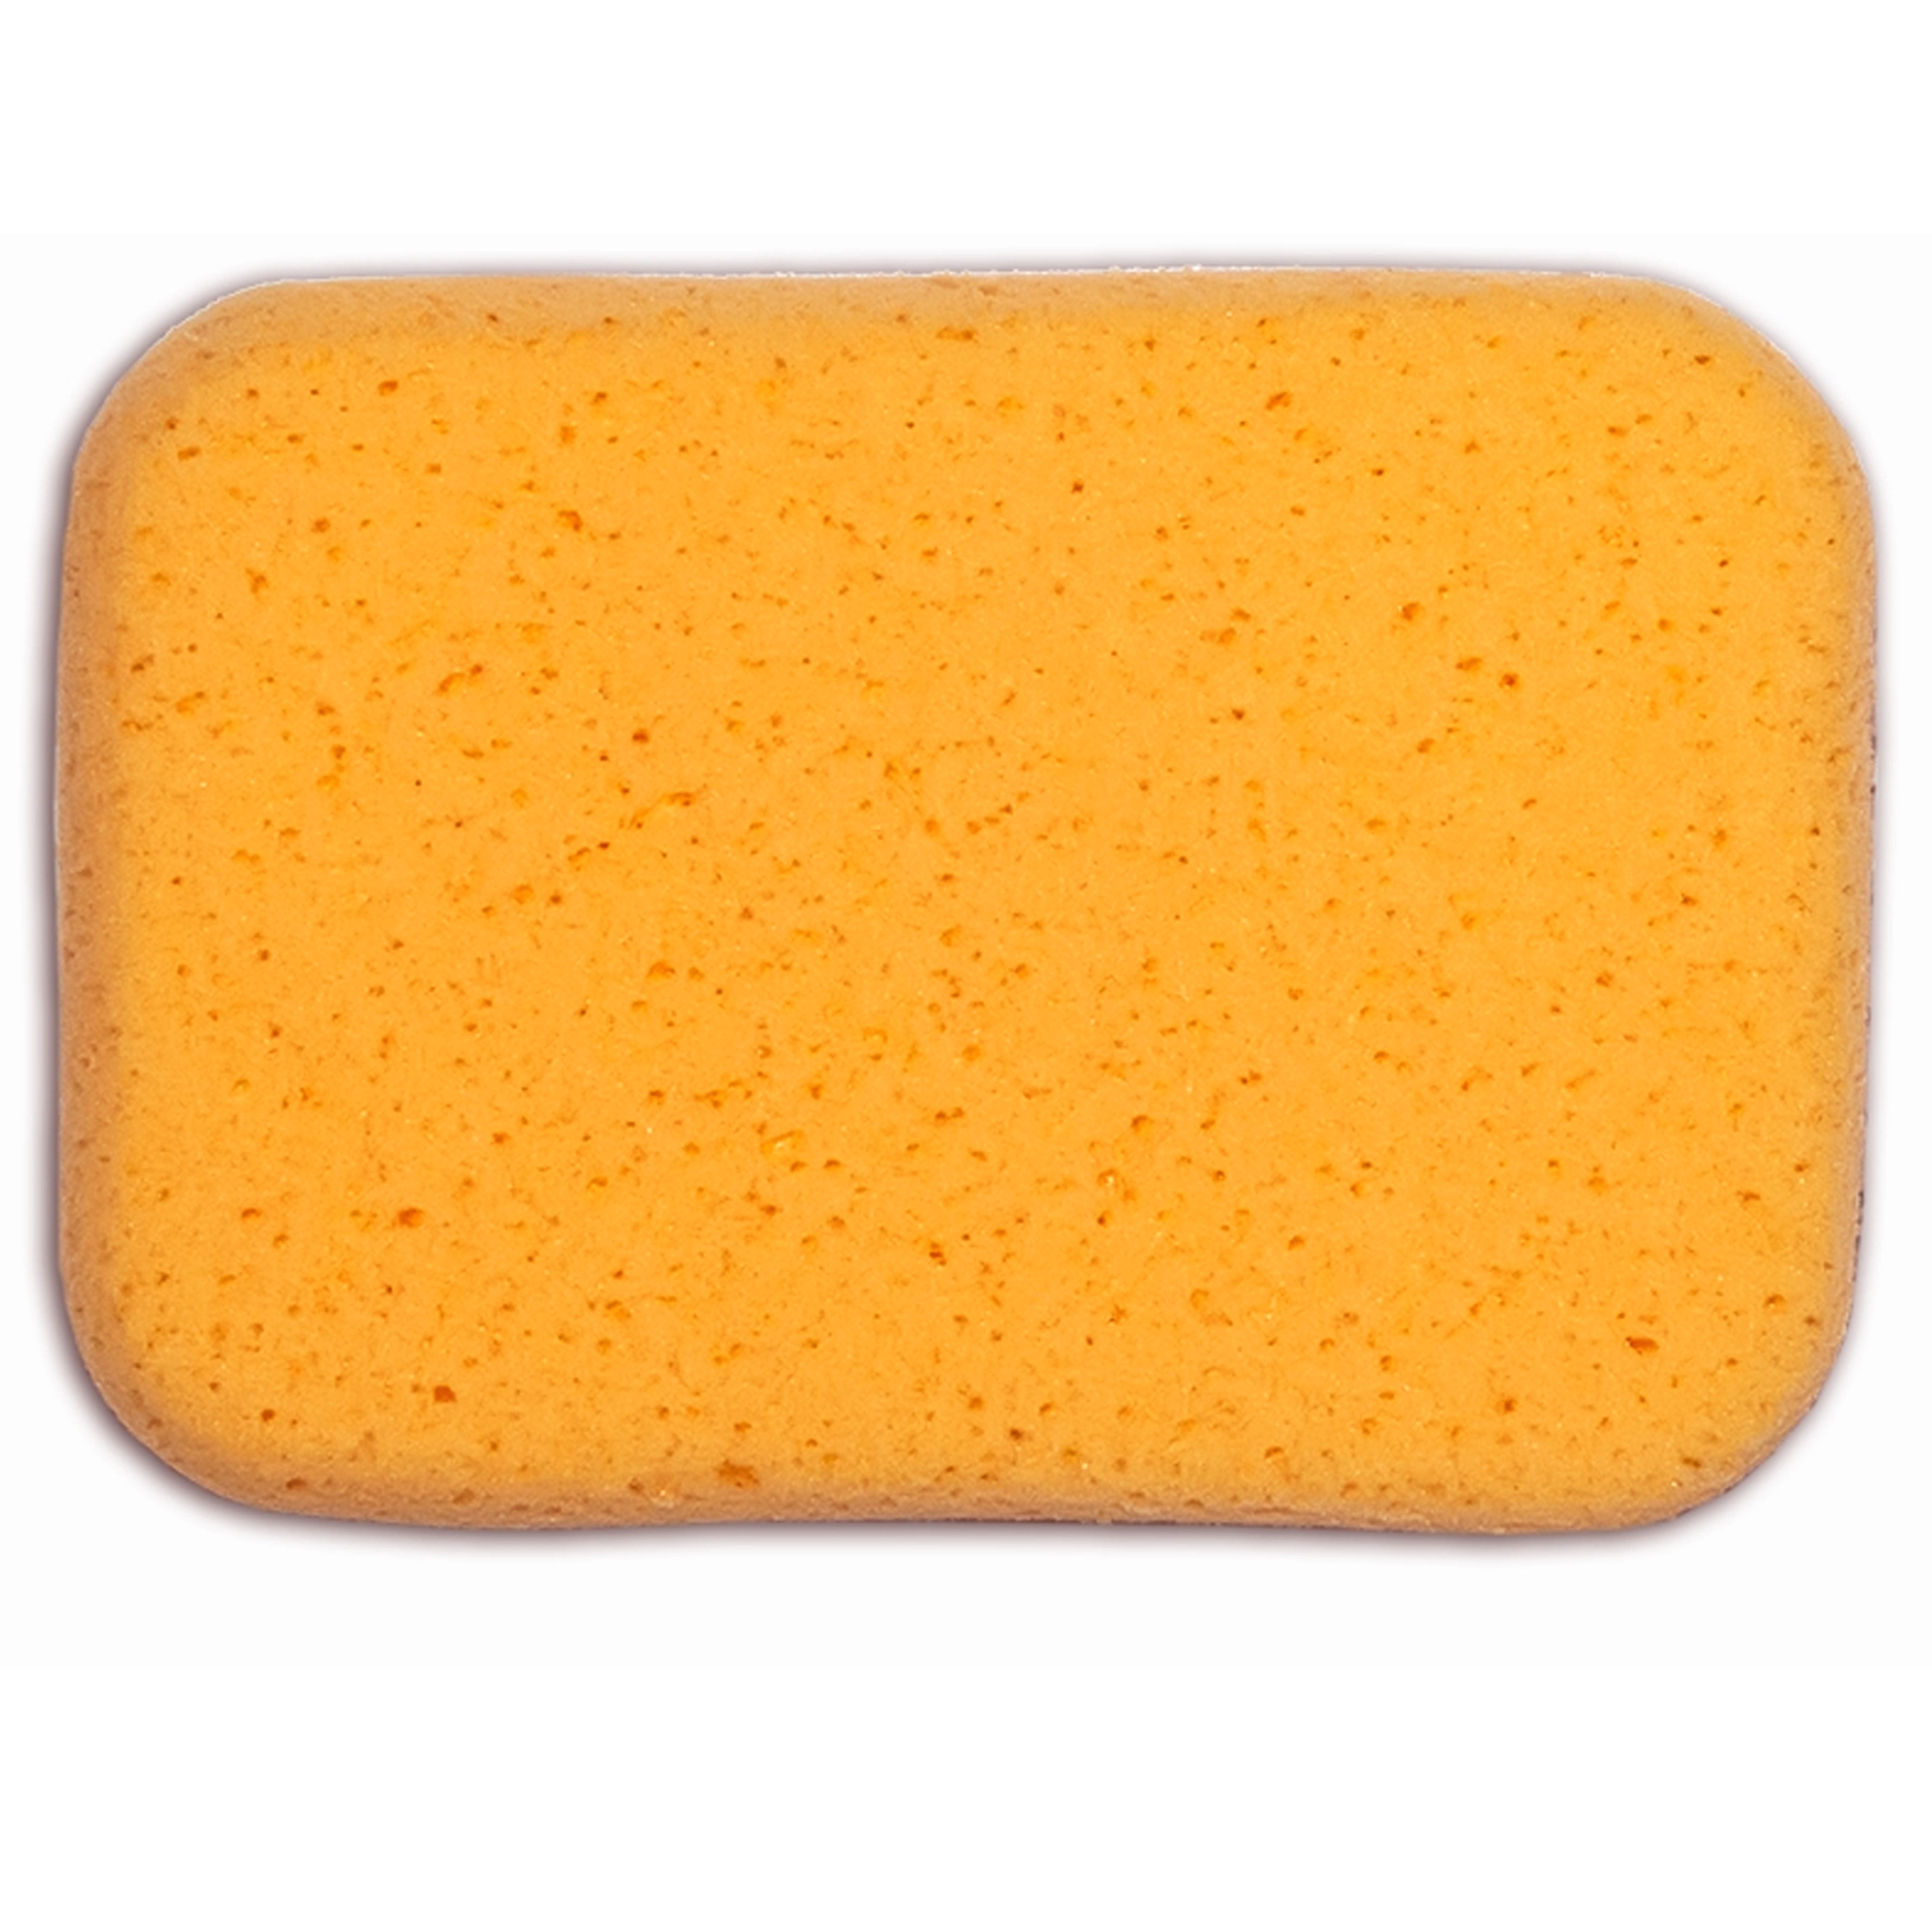 Faxco 10 Pcs Car Wash Sponges, Car Cleaning Large Sponges, Washing Car